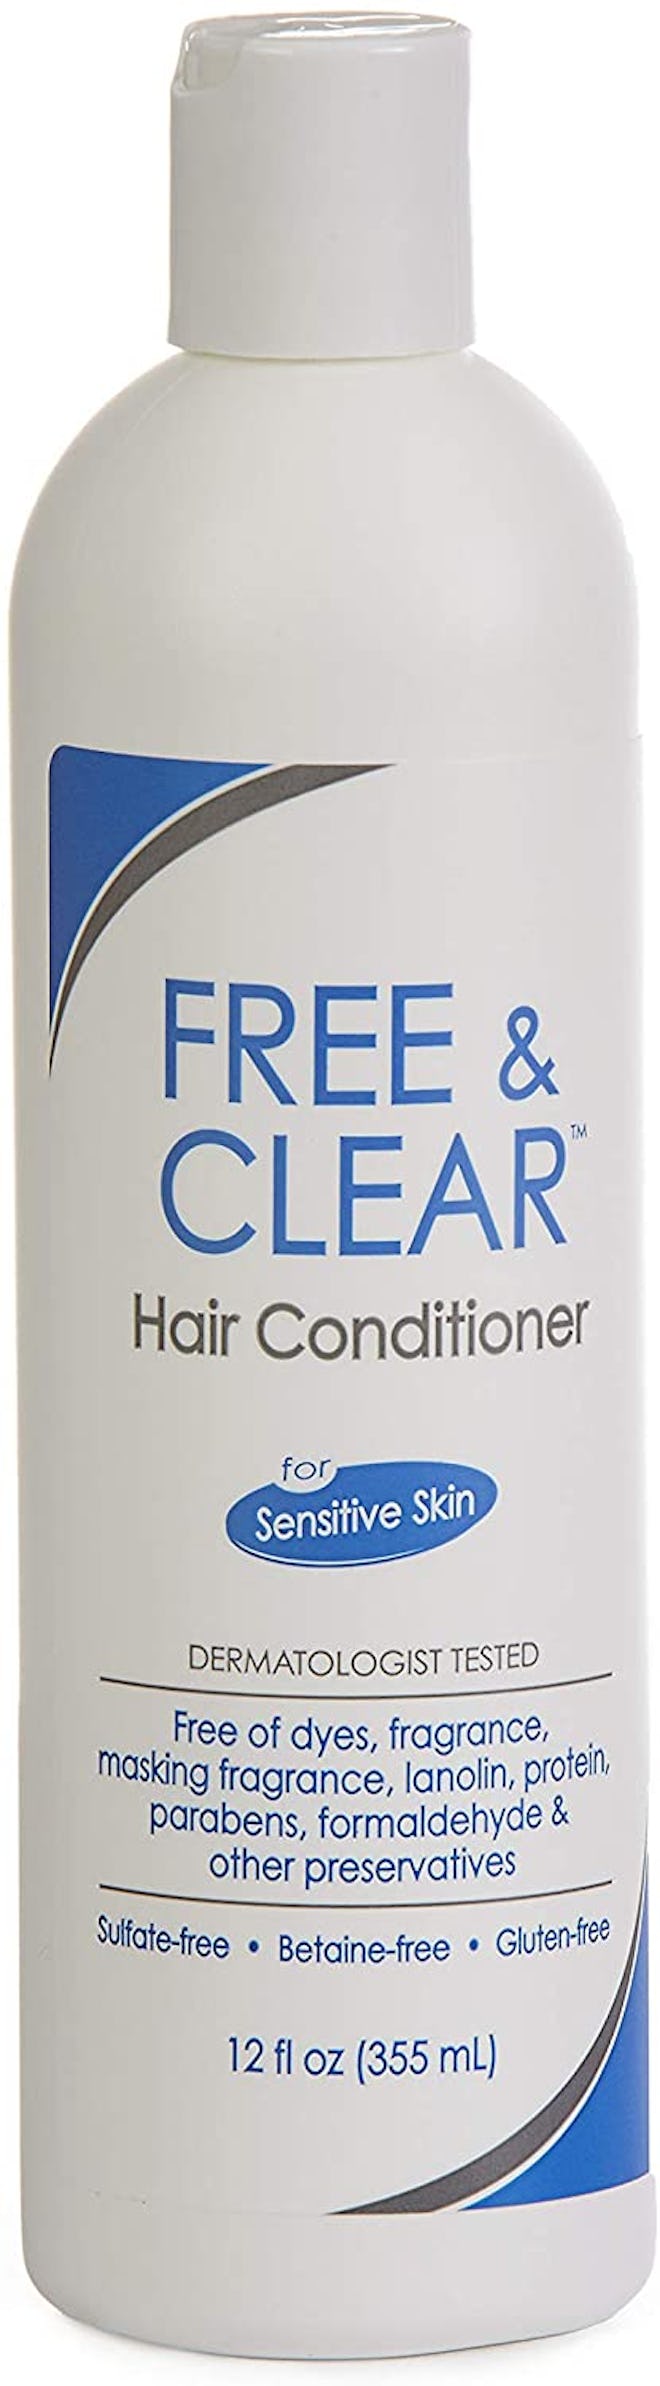 Vanicream Free & Clear Hair Conditioner 